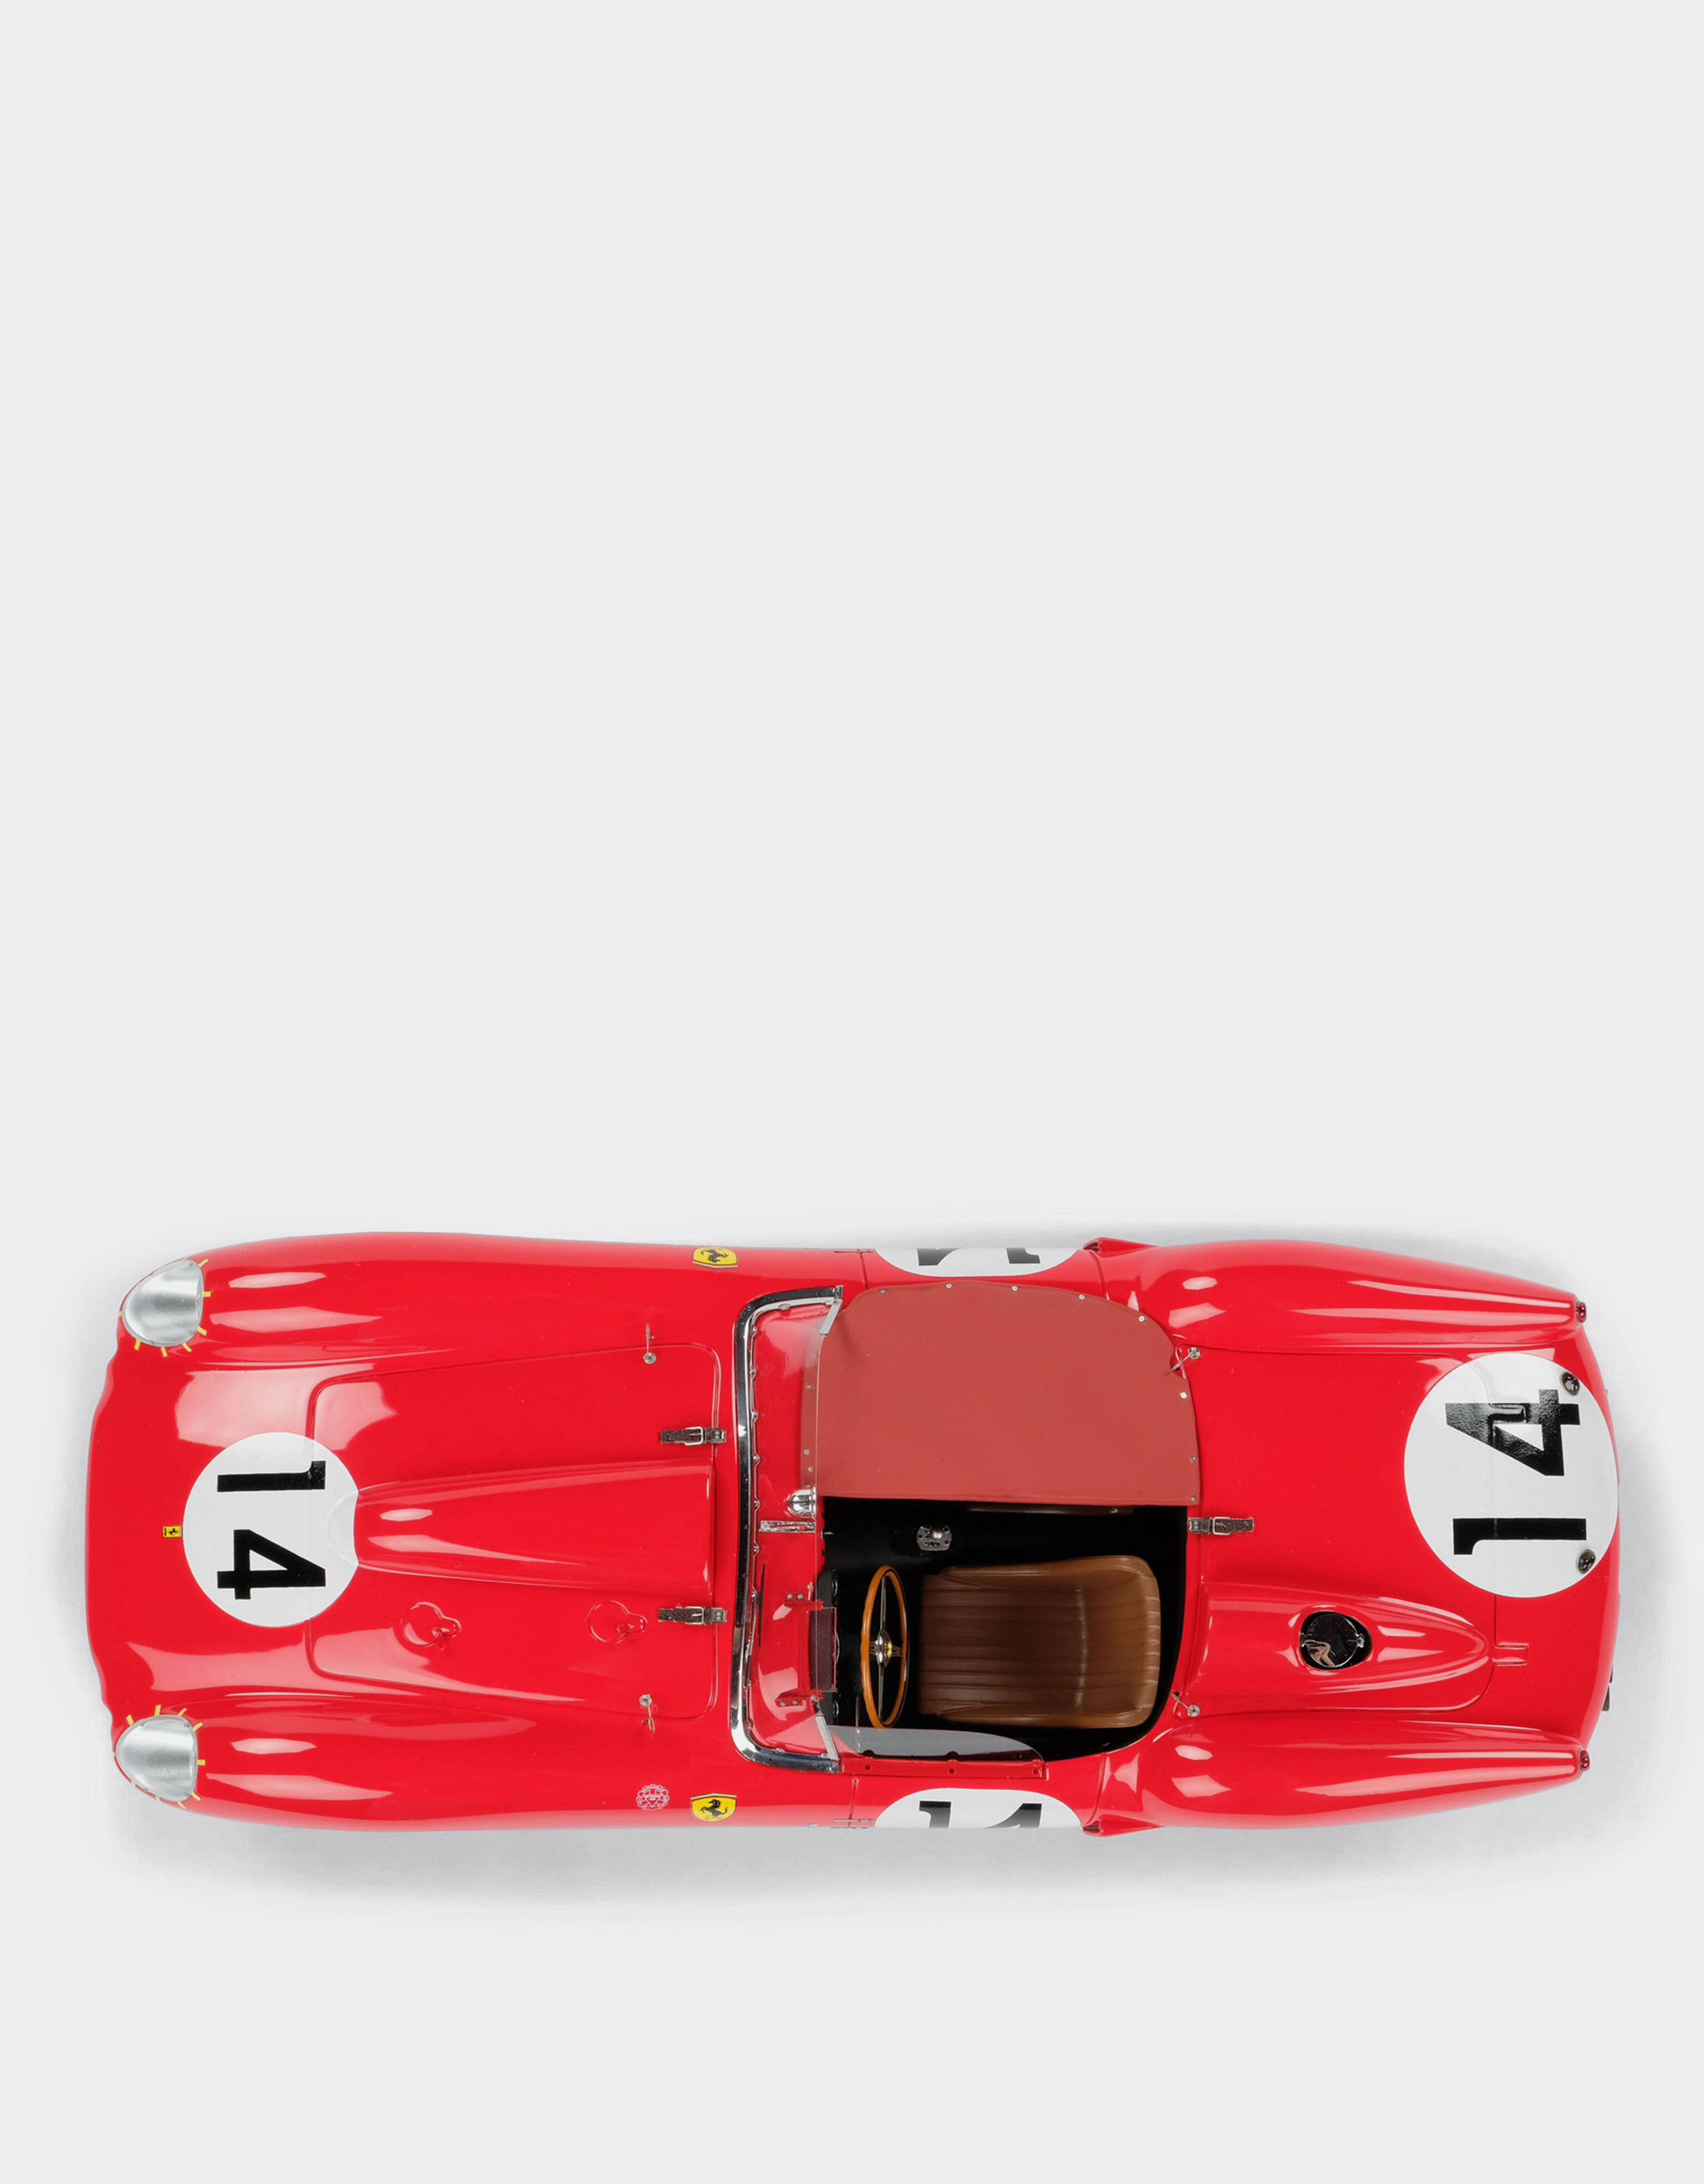 Ferrari Ferrari 250 TR 1958 Le Mans model in 1:18 scale 红色 L7580f